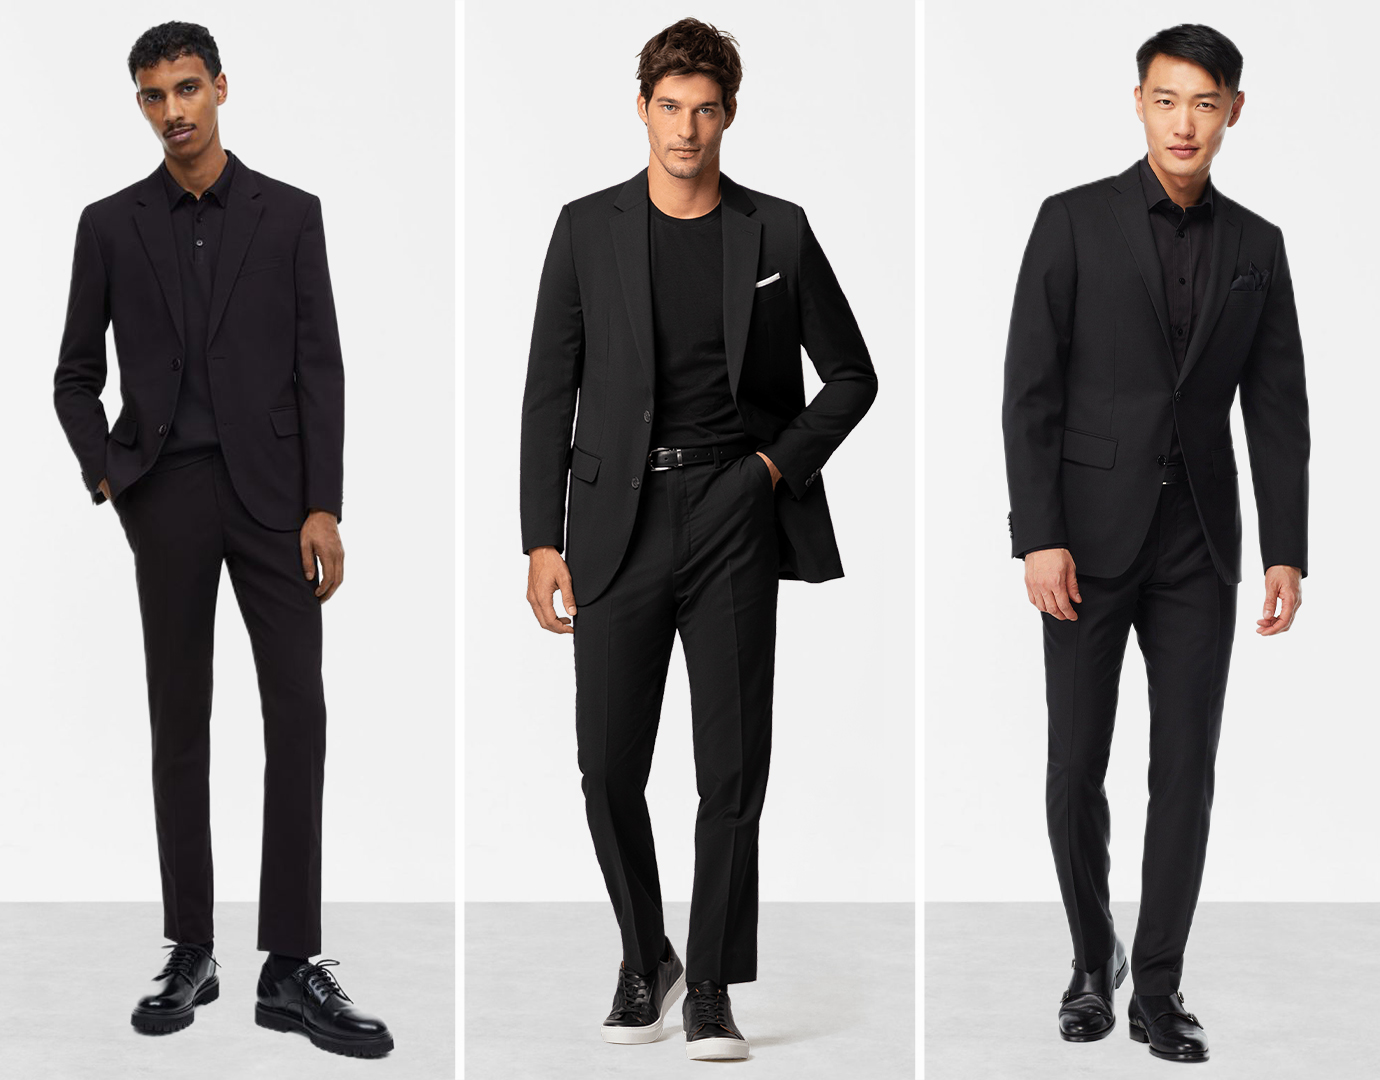 Different skin tone men wearing black suit and black shirt